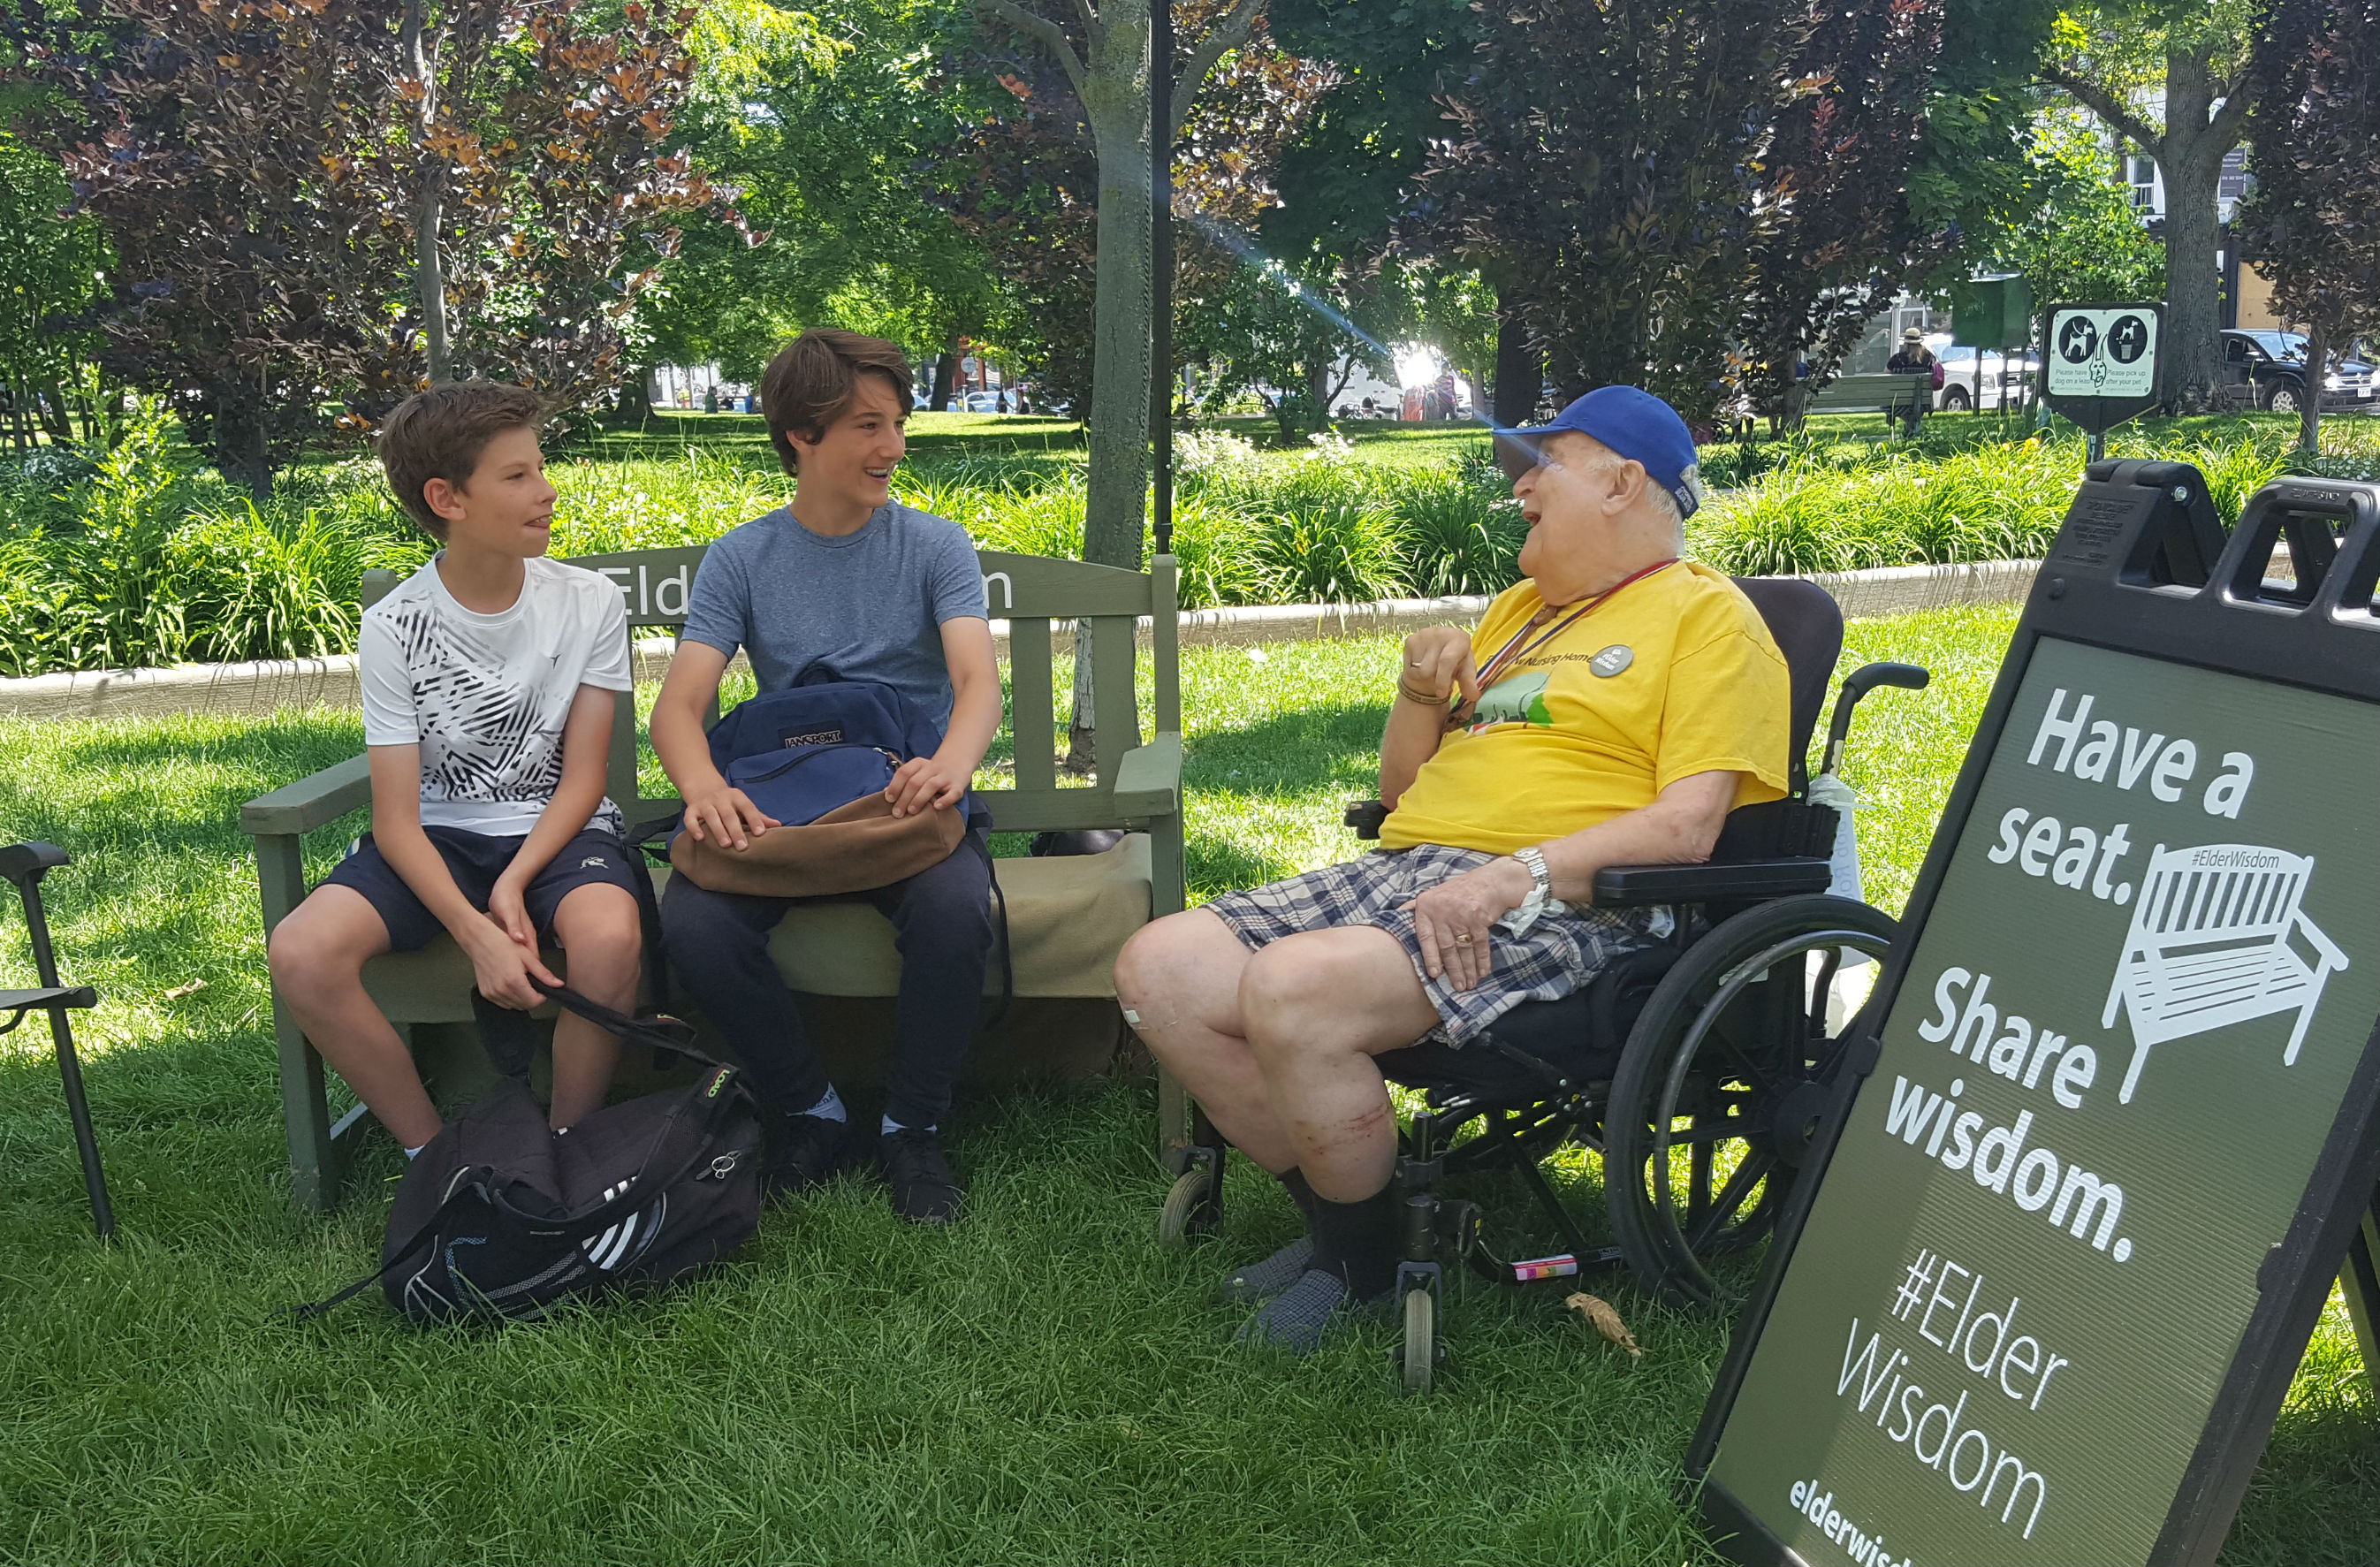 #ElderWisdom shared across Ontario in June 2018